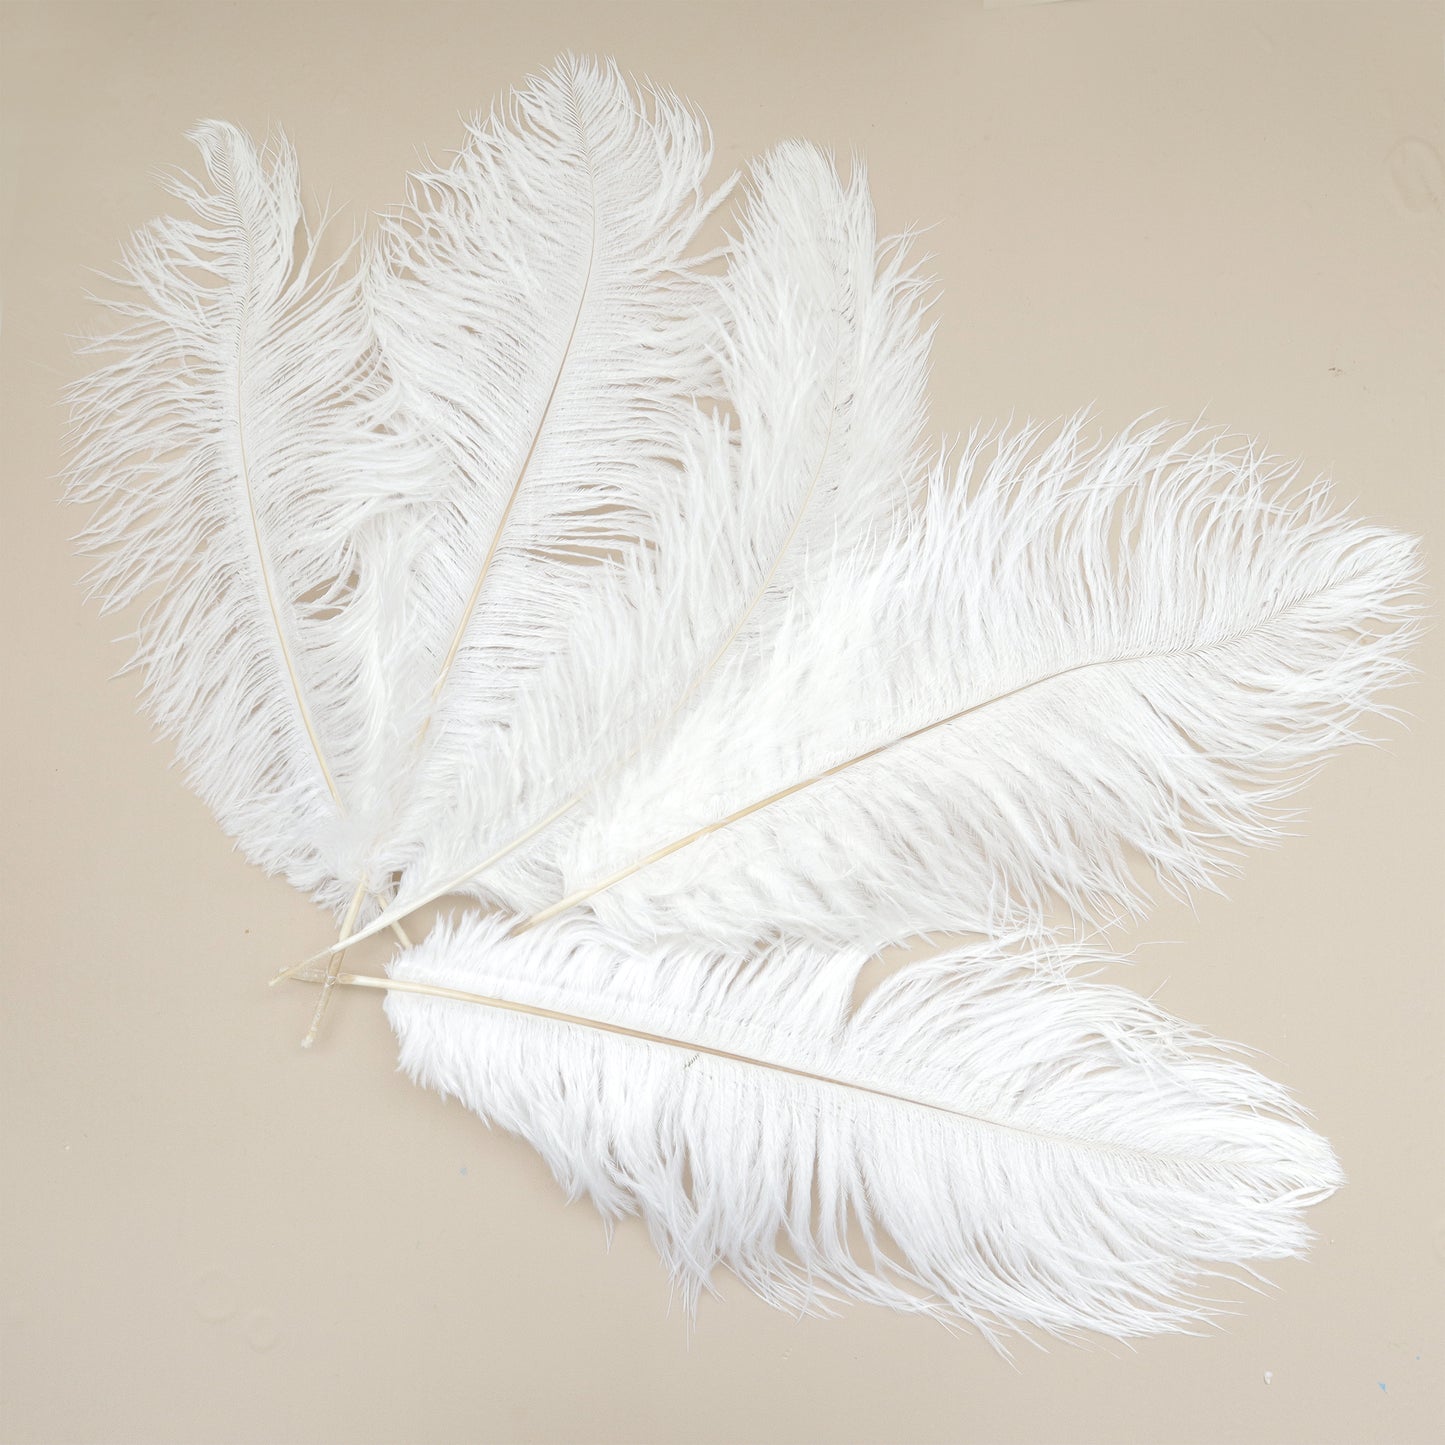 5 pcs Ostrich Feathers White